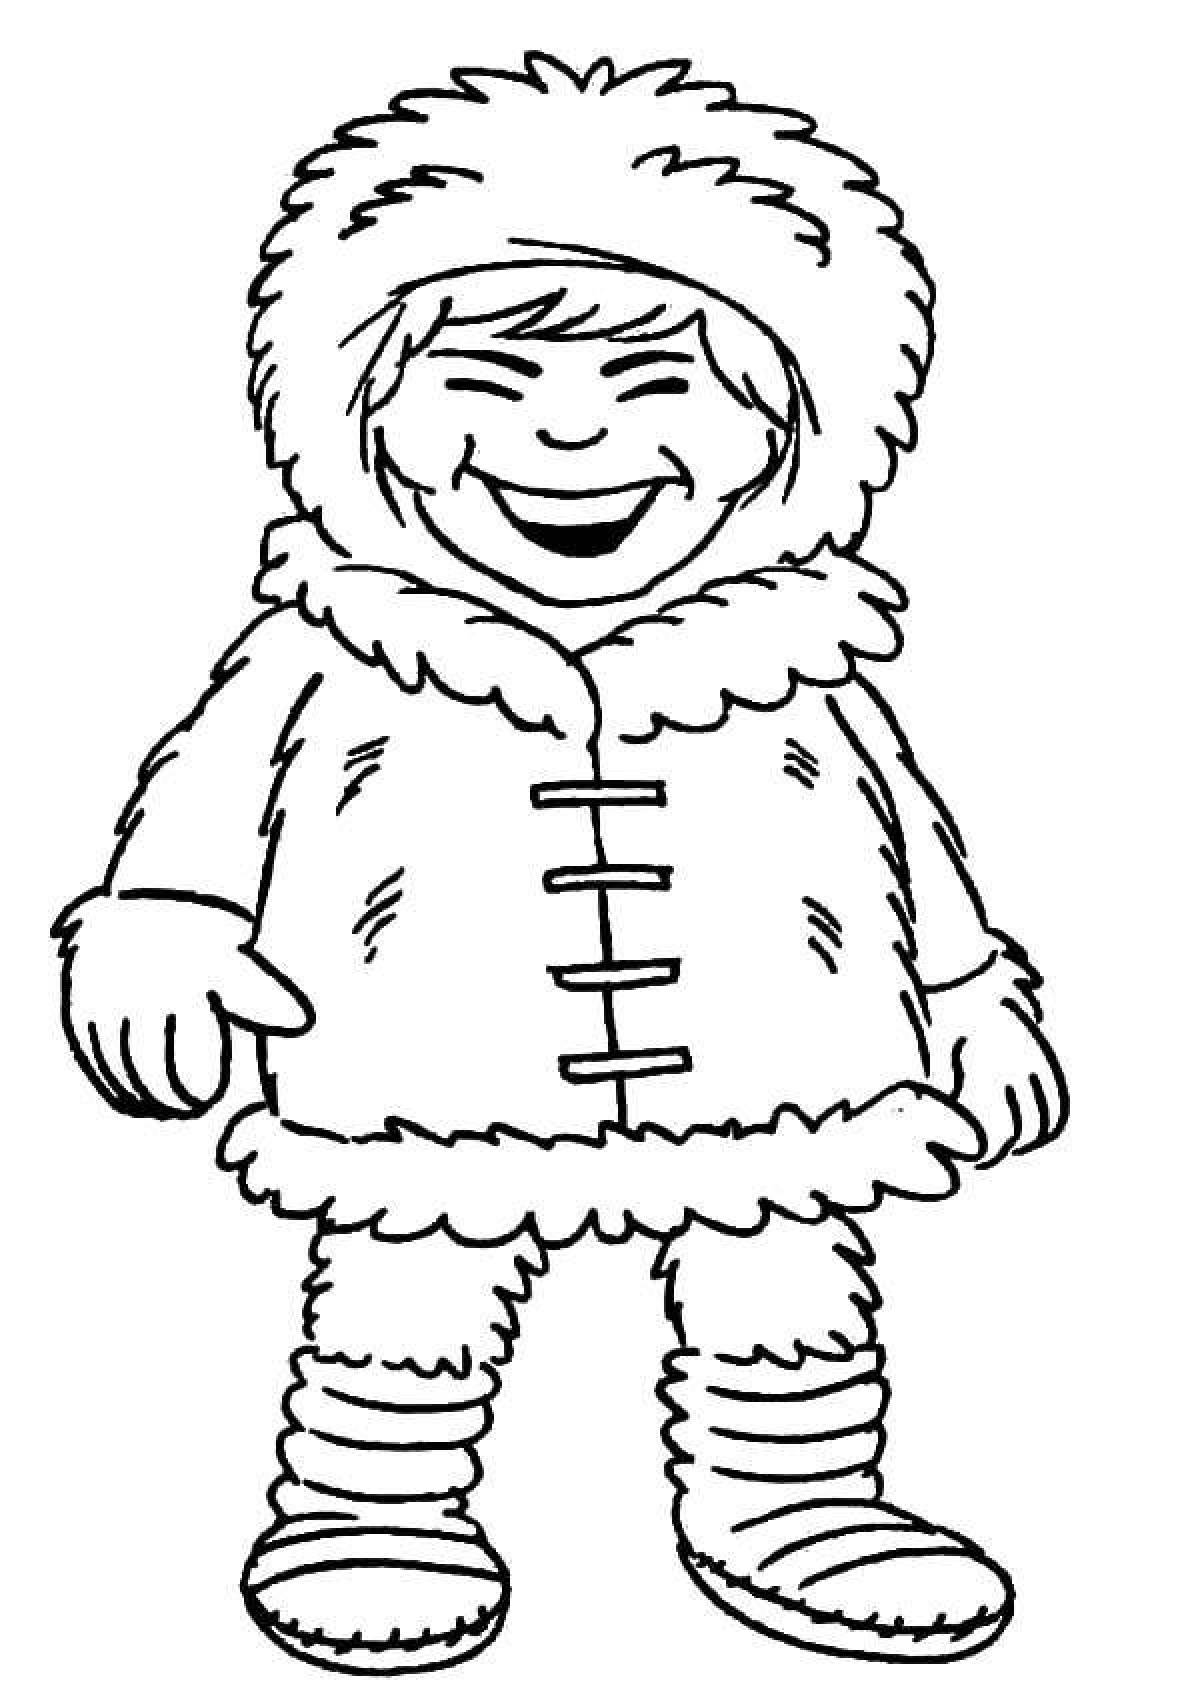 Humorous eskimo coloring book